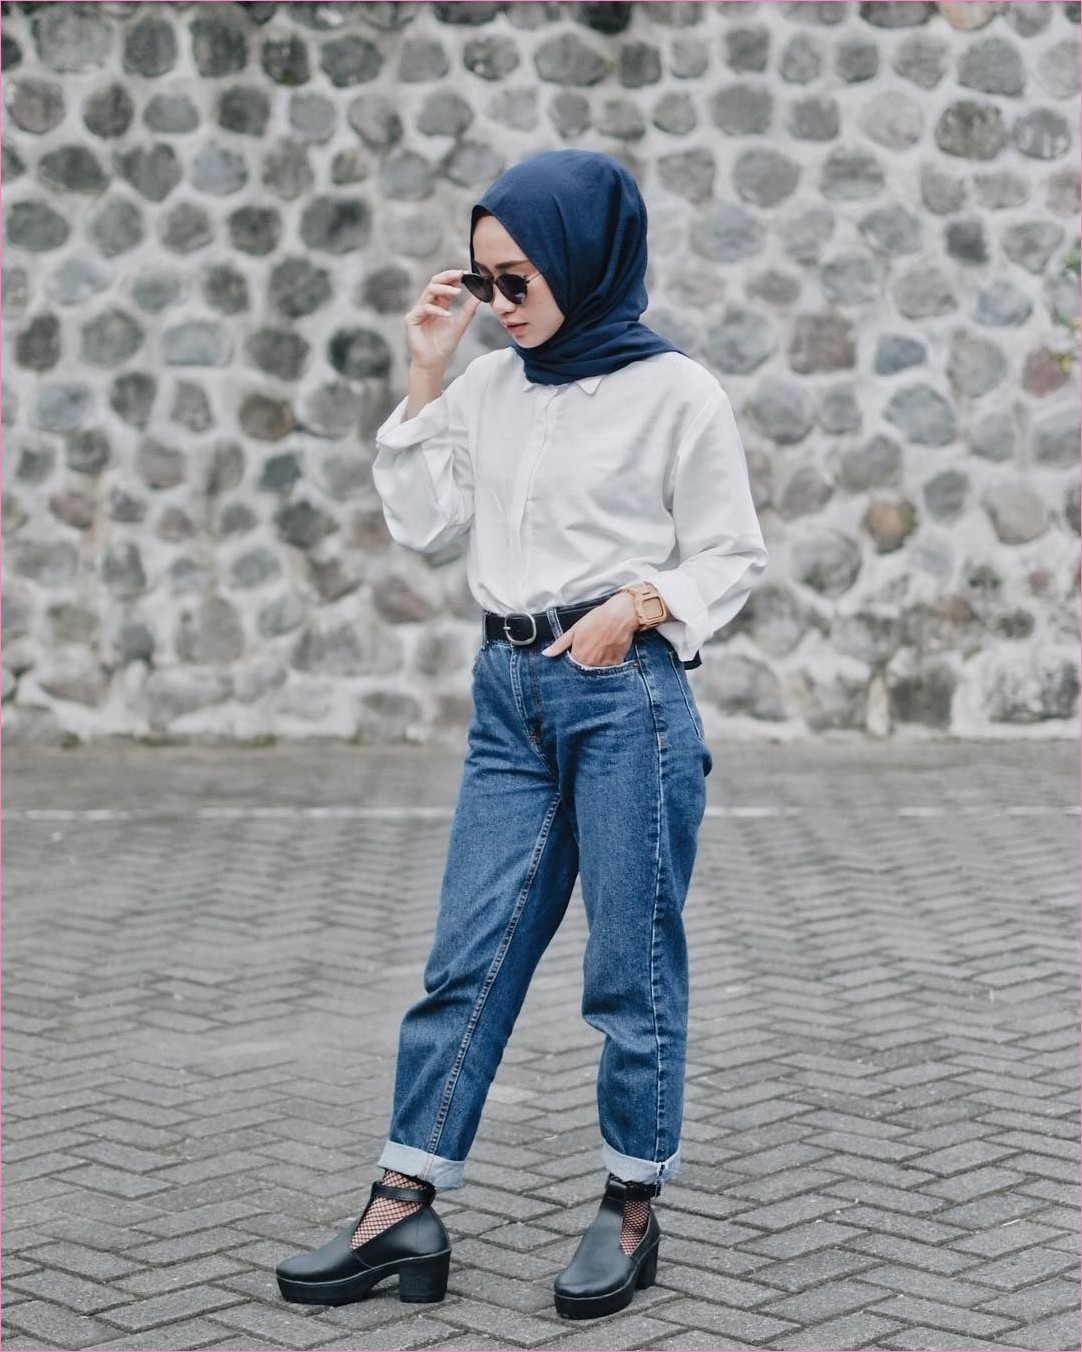 Outfit Celana  Jeans  Untuk Hijabers Ala Selebgram 2019